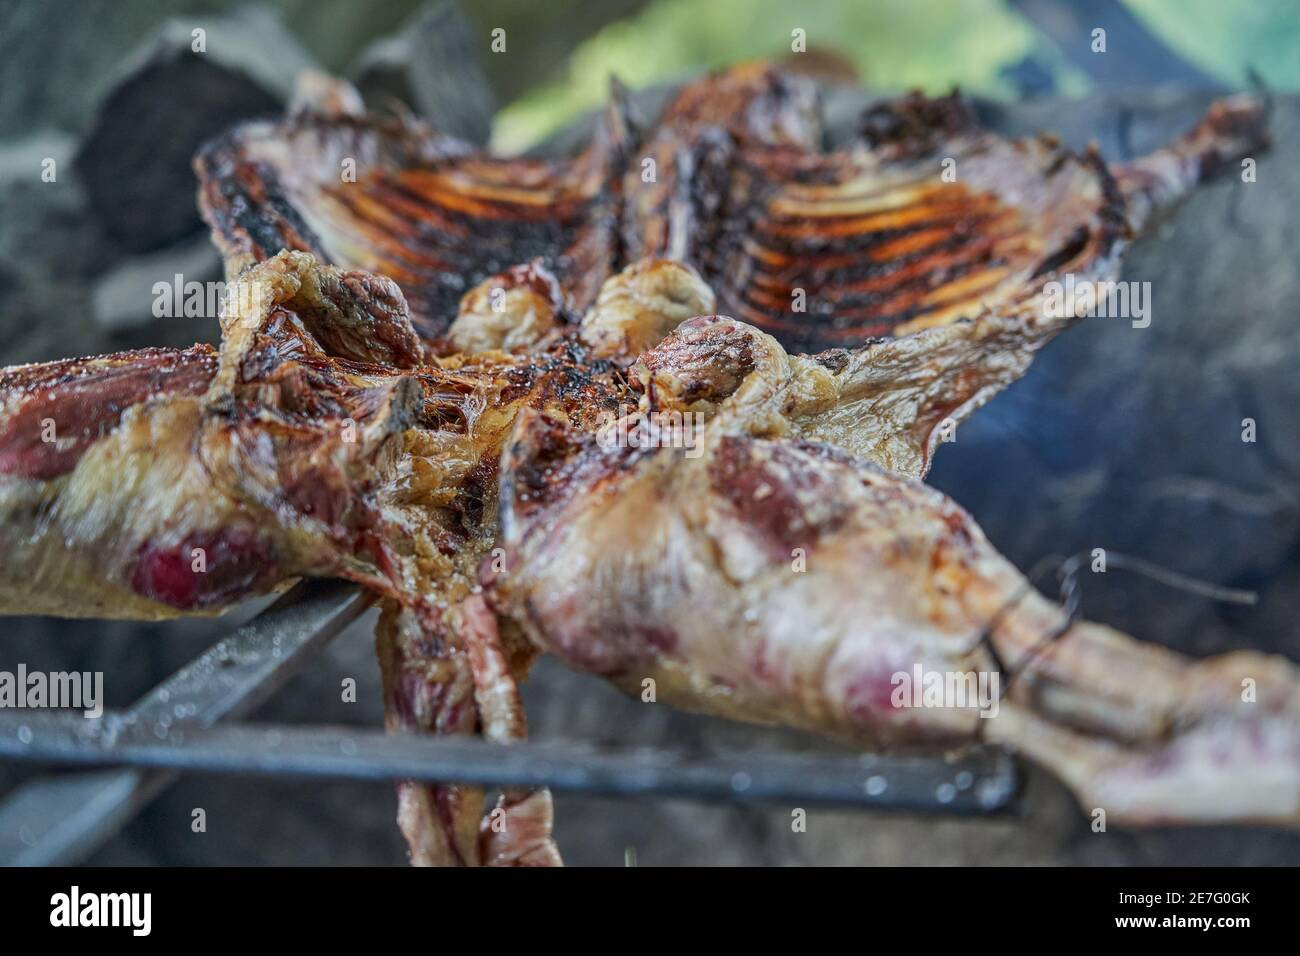 Parrilla Argentina barbecue Stock Photo by ©rocharibeiro 98816048